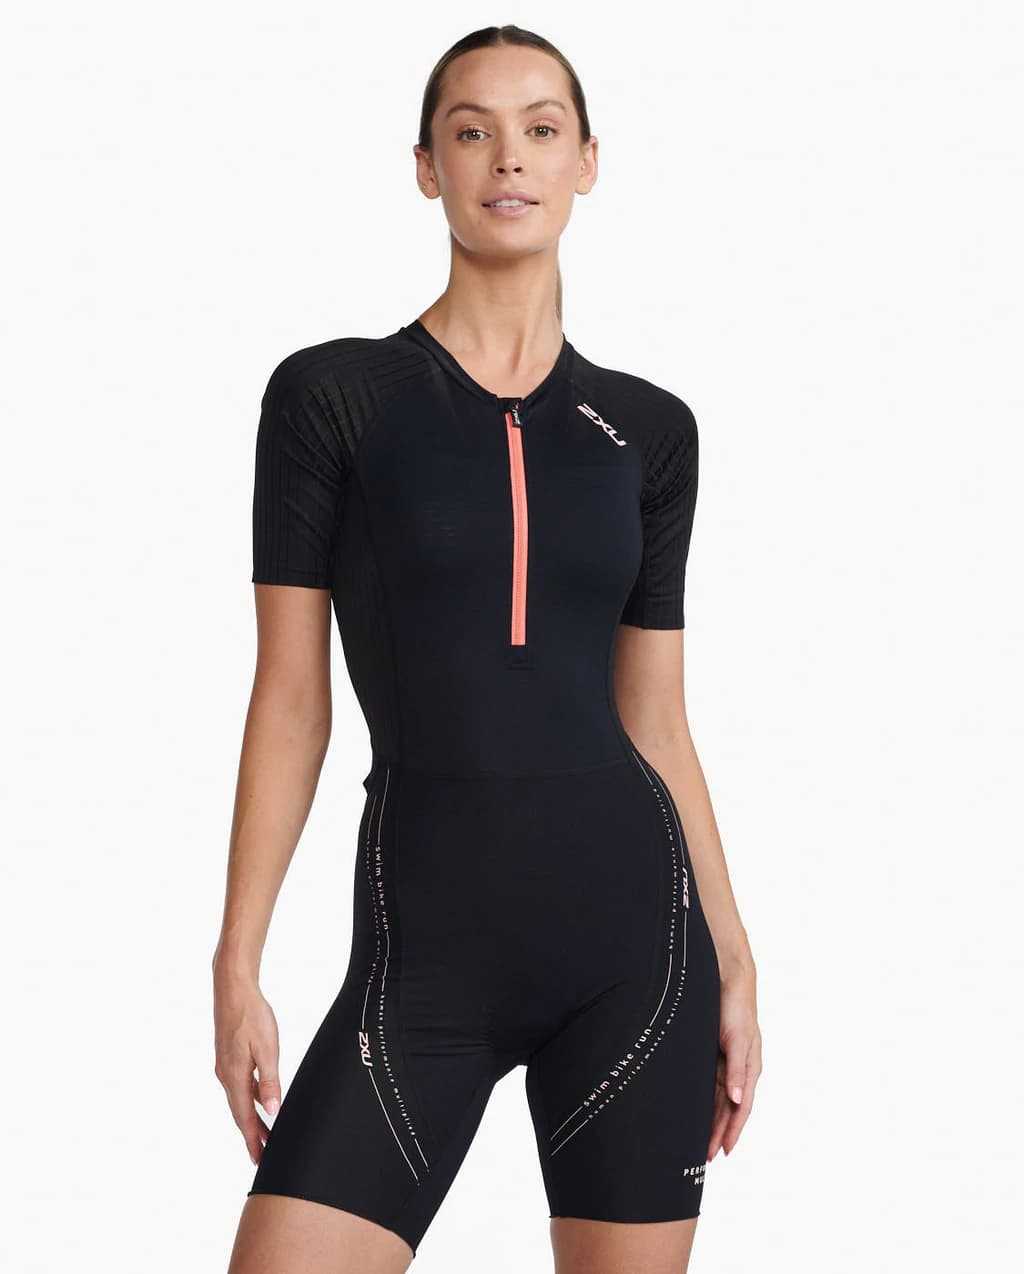 2XU Woman's Aero Sleeved Trisuit Black/Hyper Coral